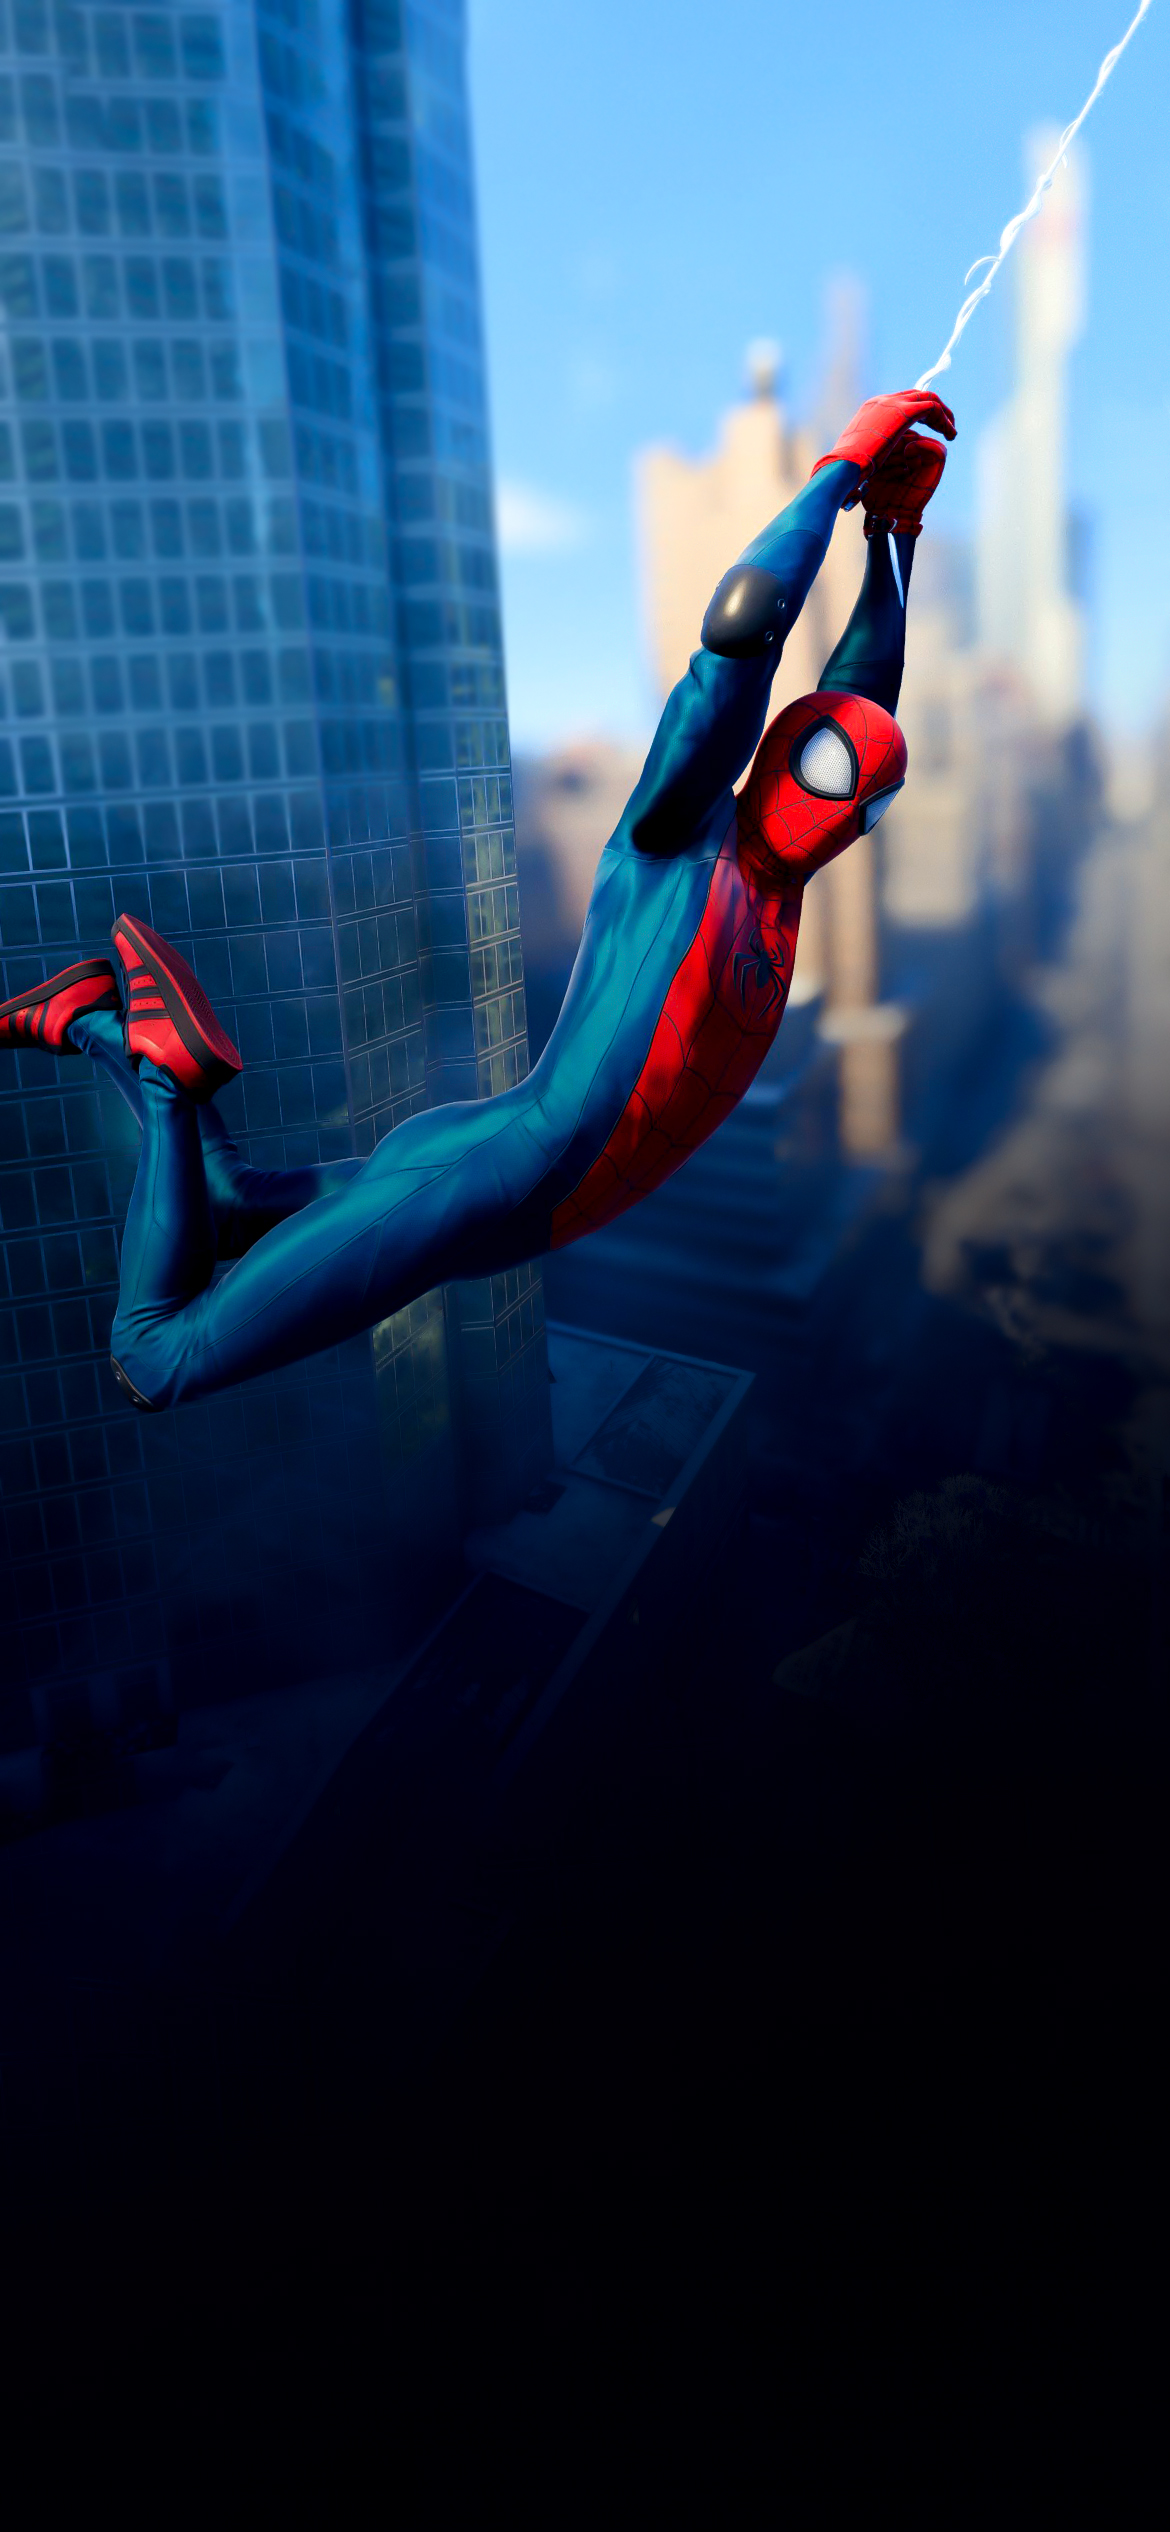 Spider Man PS4 Wallpapers  Top 20 Best Spider Man PS4 Wallpapers Download